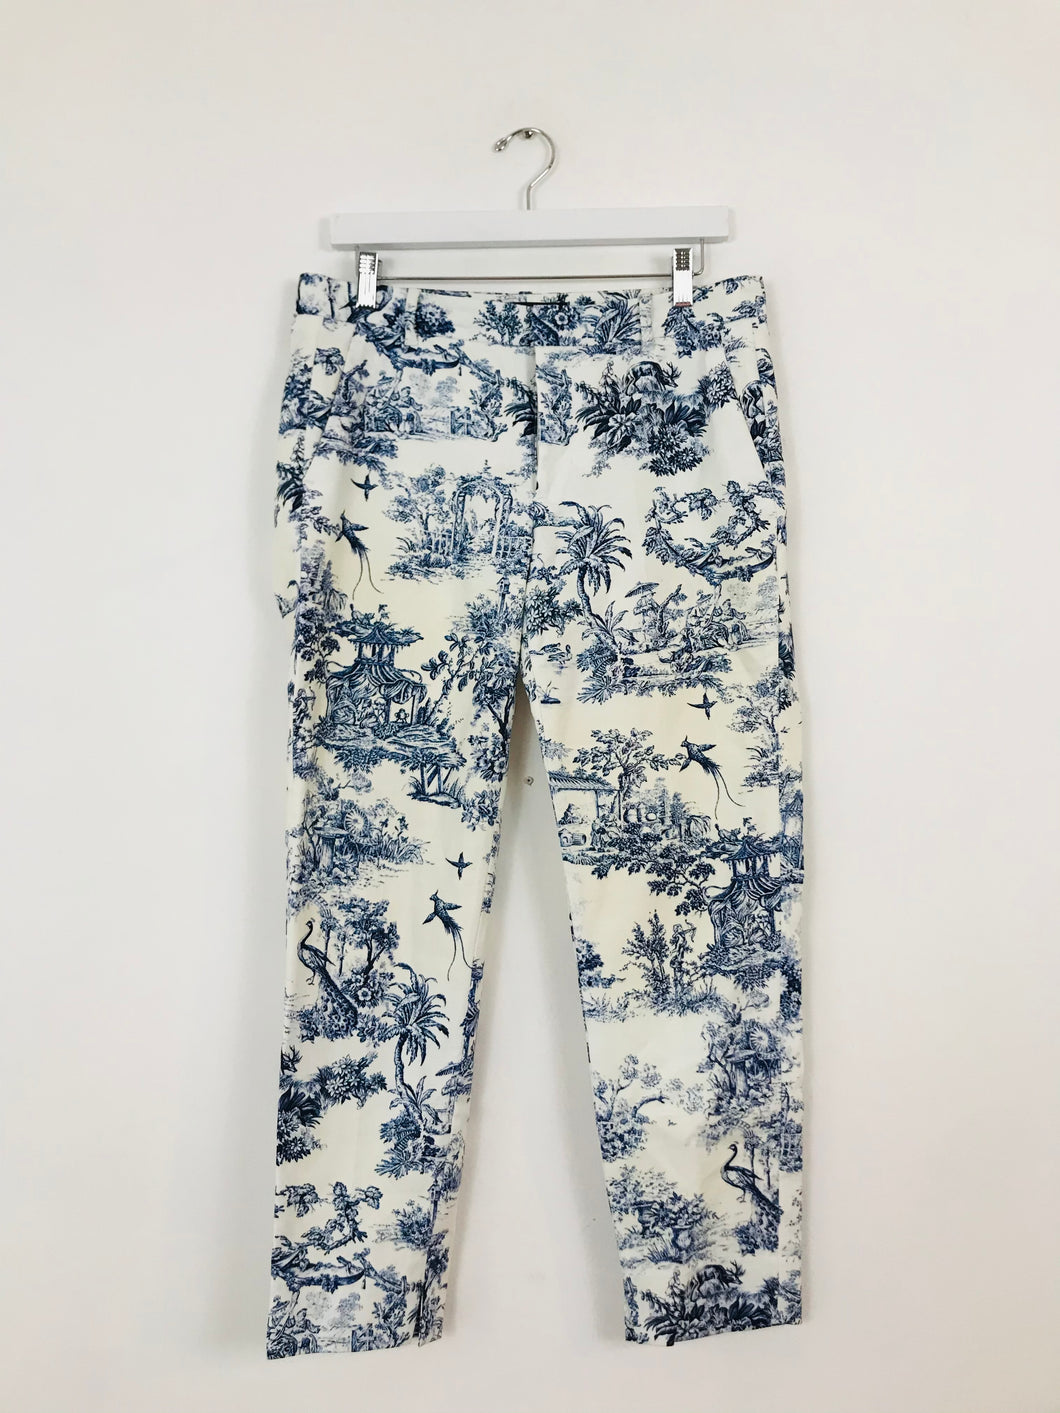 Zara Women’s Printed Skinny Trousers | 38 UK10 | White Blue